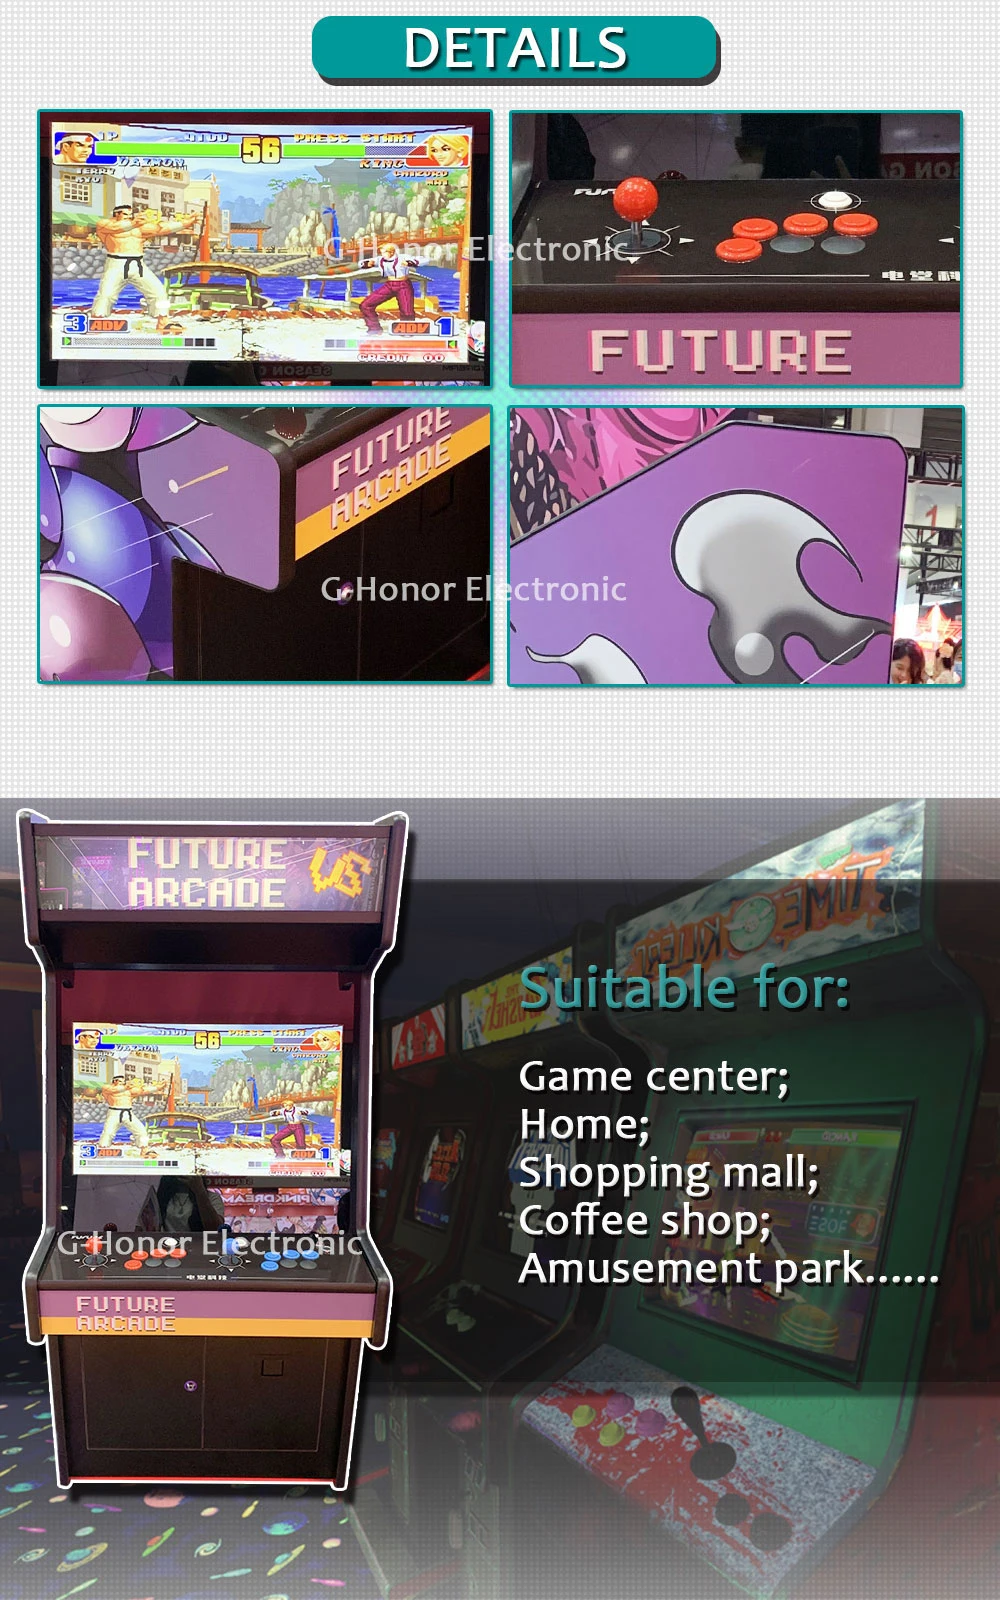 Electronic Game Console Retro Arcade Game Machine Simulator Video Game Machine Coin Operated Street Fighter Game Machine Arcade Cabinet